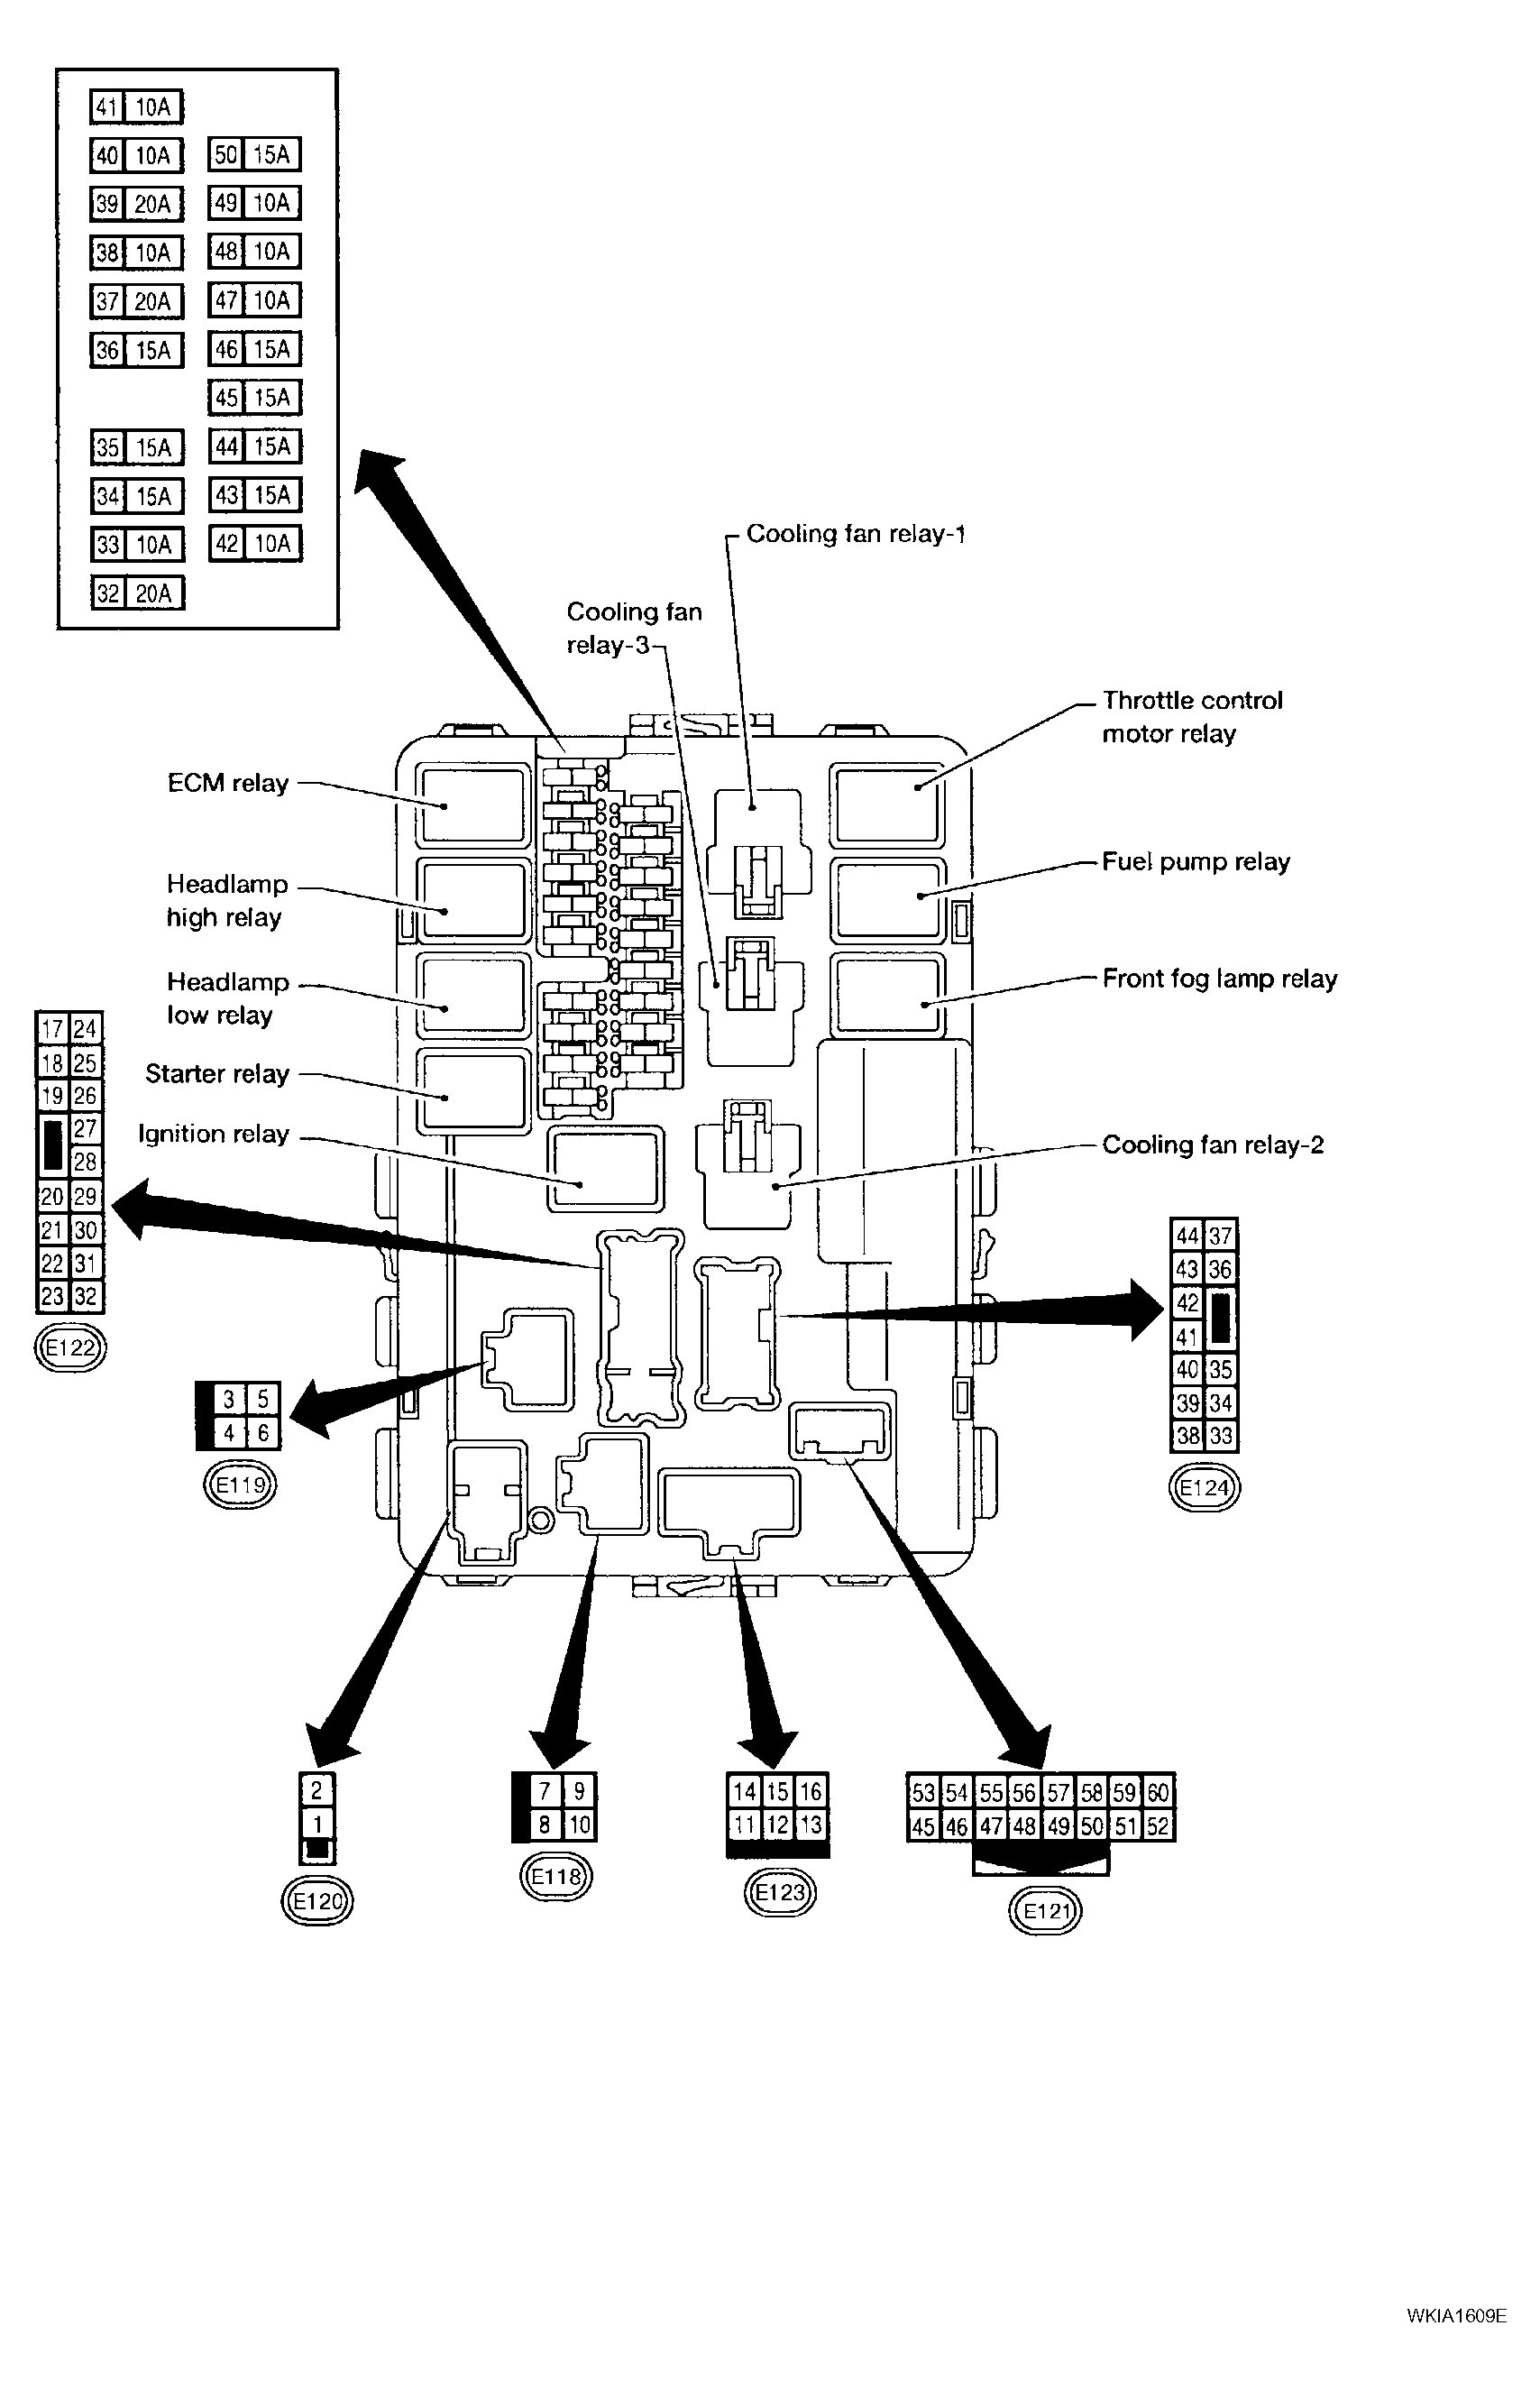 1993 Nissan Sentra Engine Diagram Nissan 3 0 Engine Diagram Wiring Diagram today Of 1993 Nissan Sentra Engine Diagram